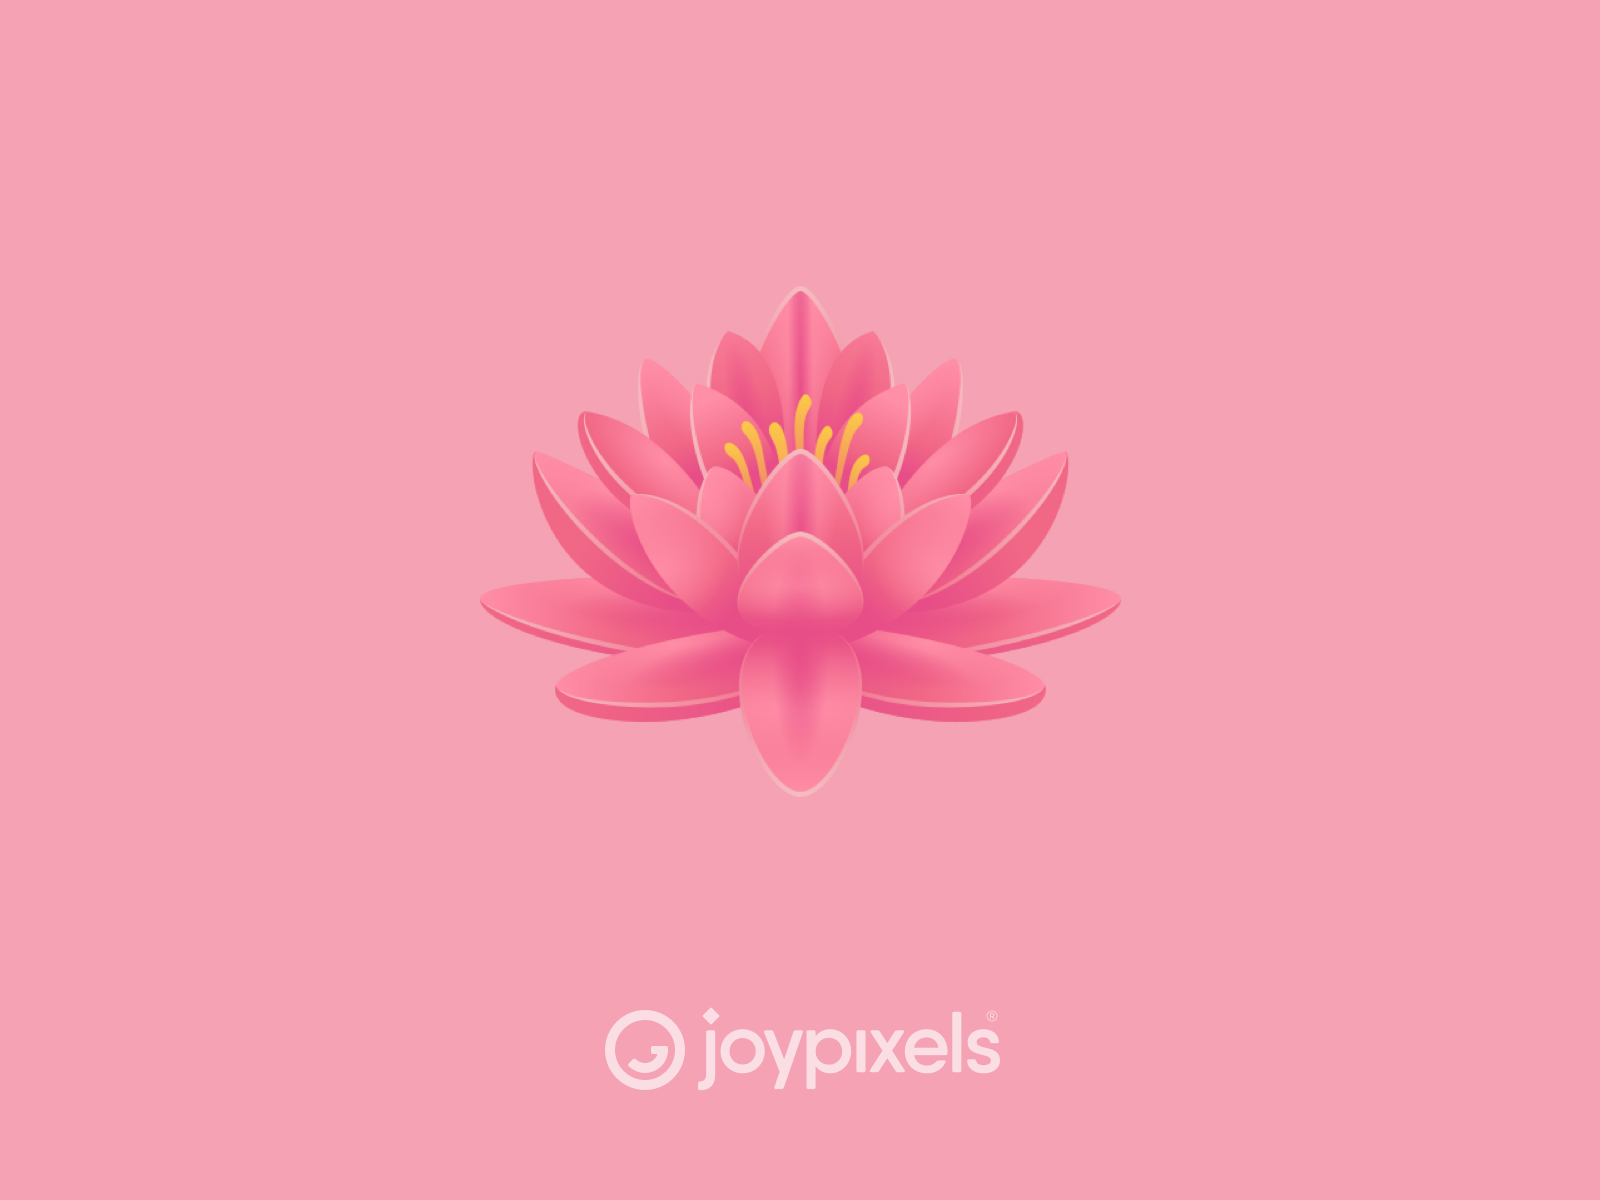 Joypixels Lotus Flower Emoji